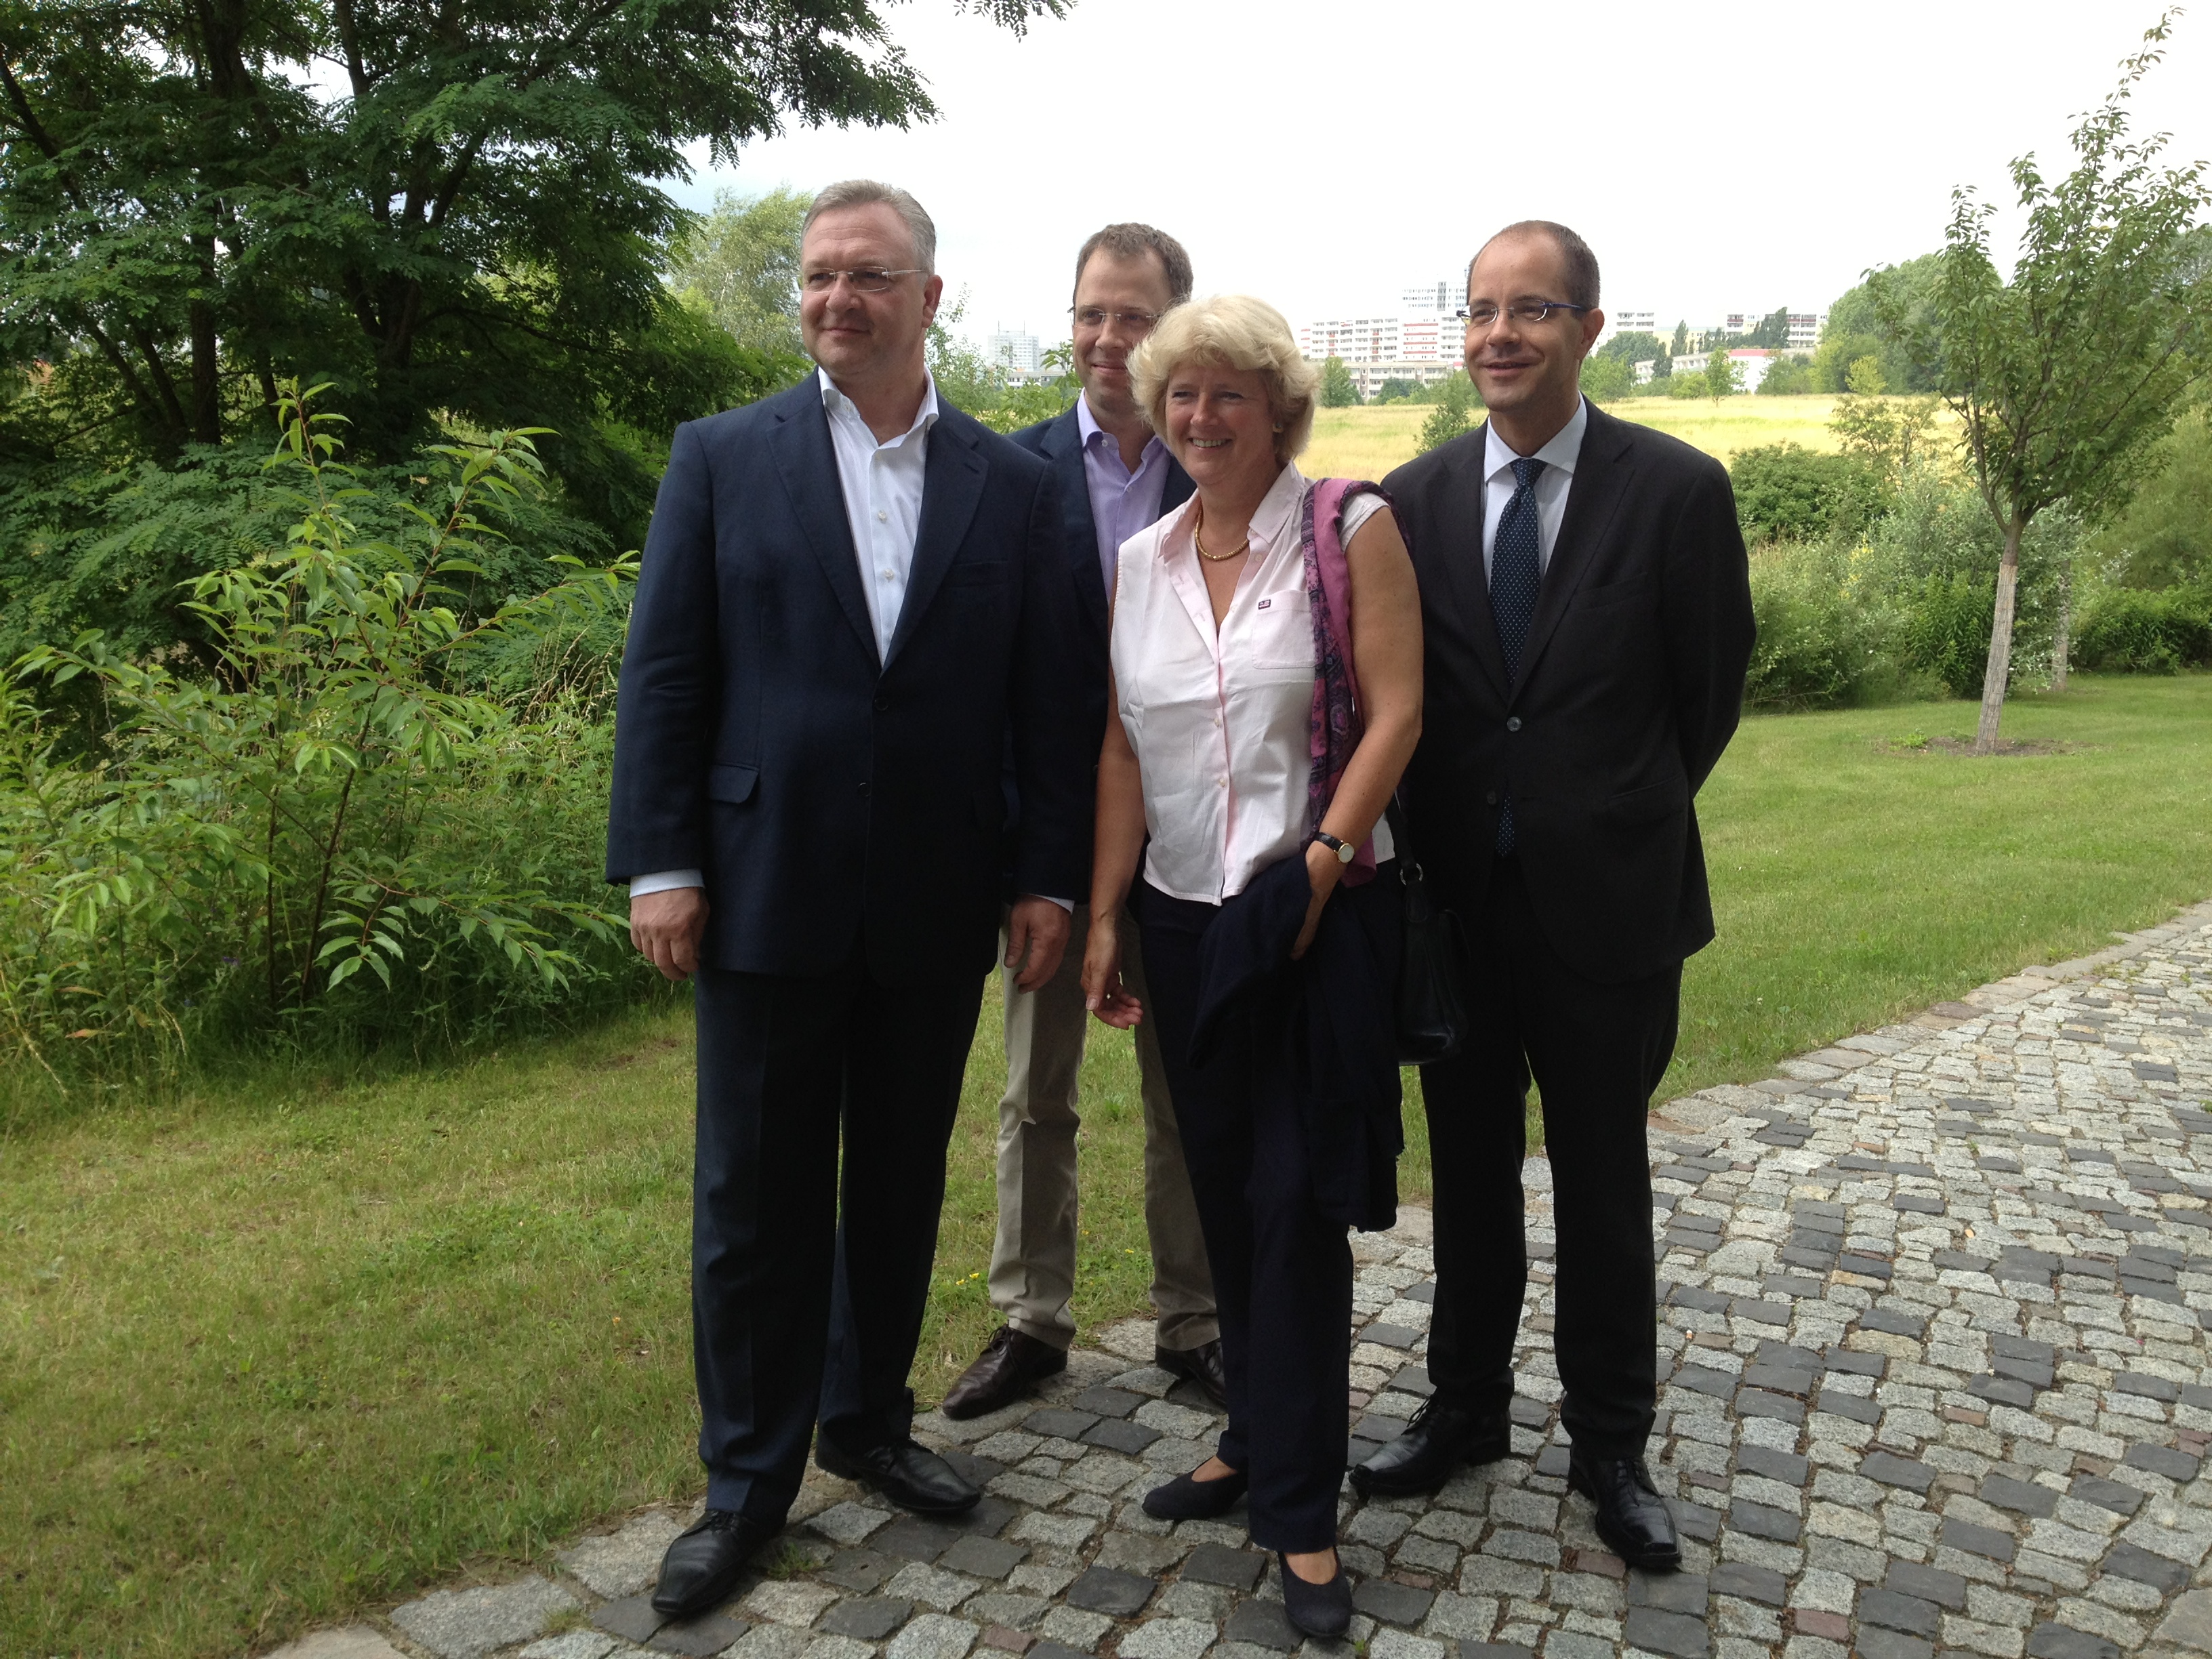 Frank Henkel, Mario Czaja, Monika Grütters und Christian Gräff im Erholungspark Marzahn